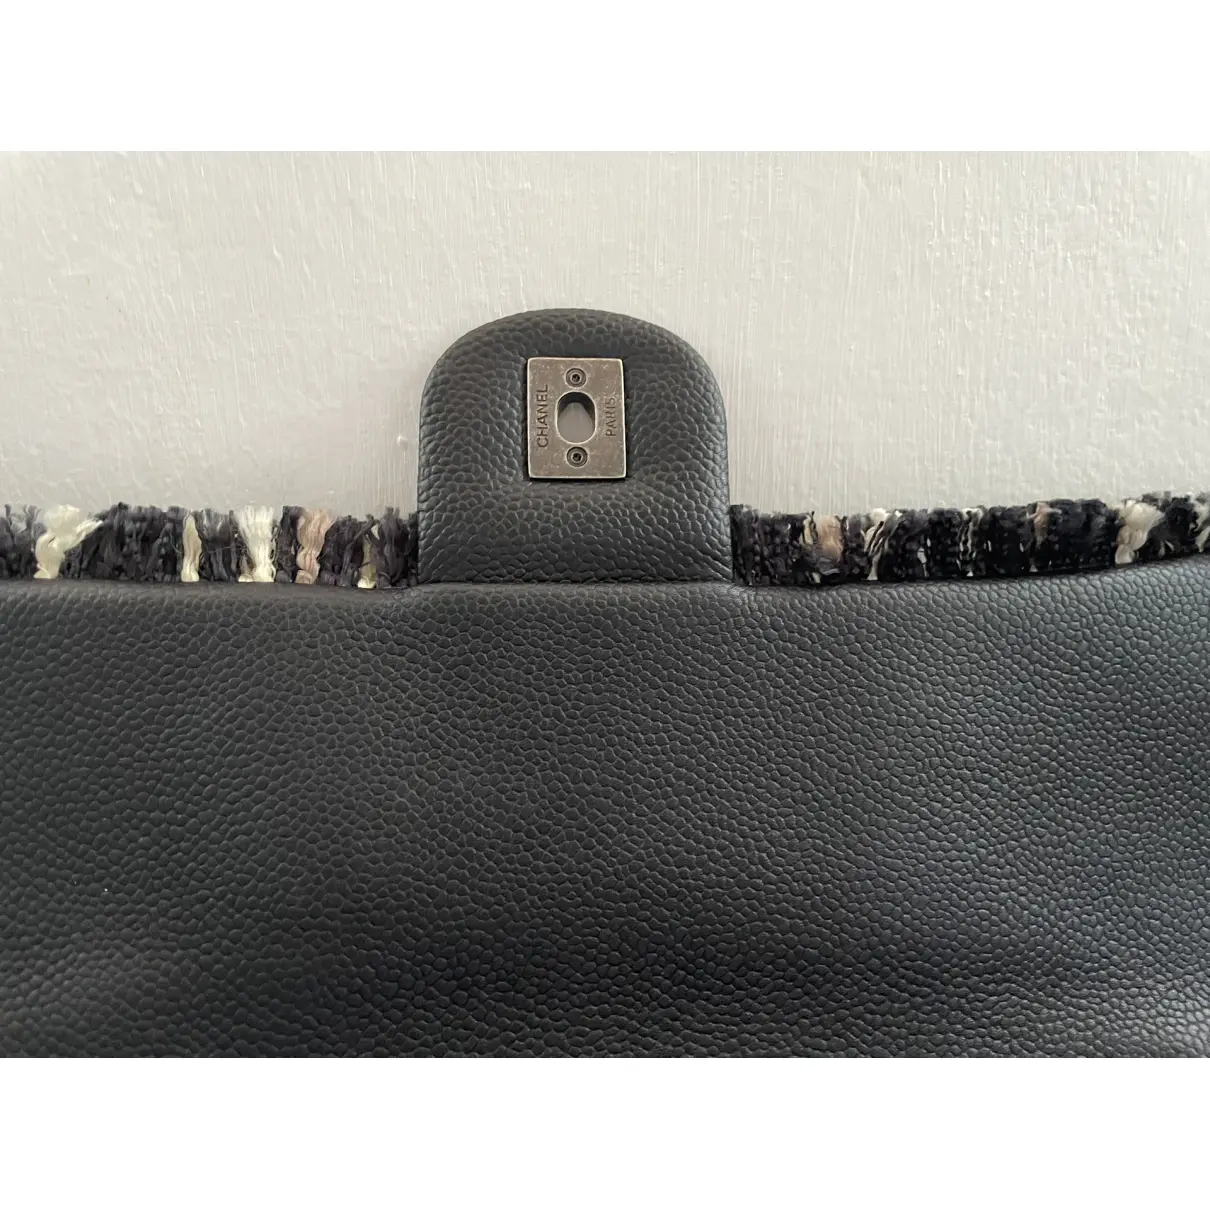 Business Affinity tweed handbag Chanel